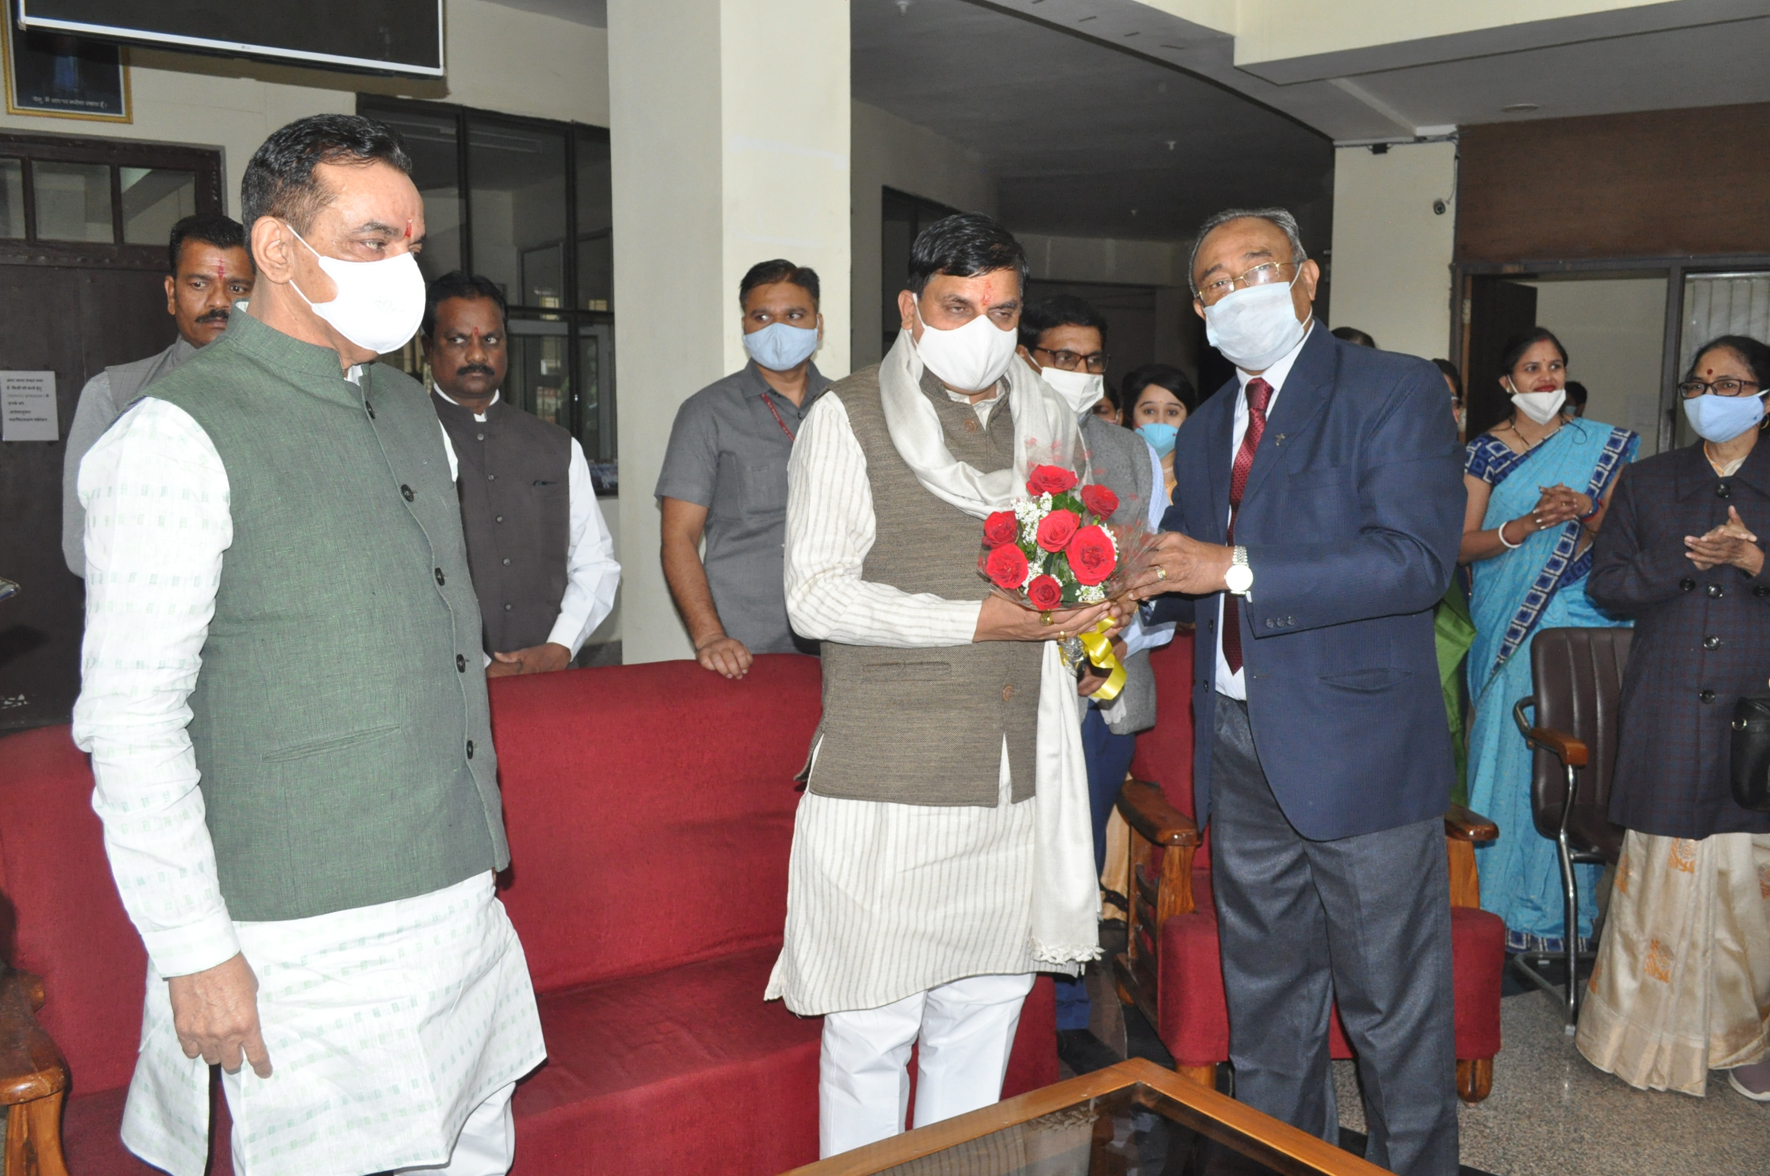 Visit by Hon’ble Dr. Mohan Yadav Ji (Minister of Higher Education) 09/12/20